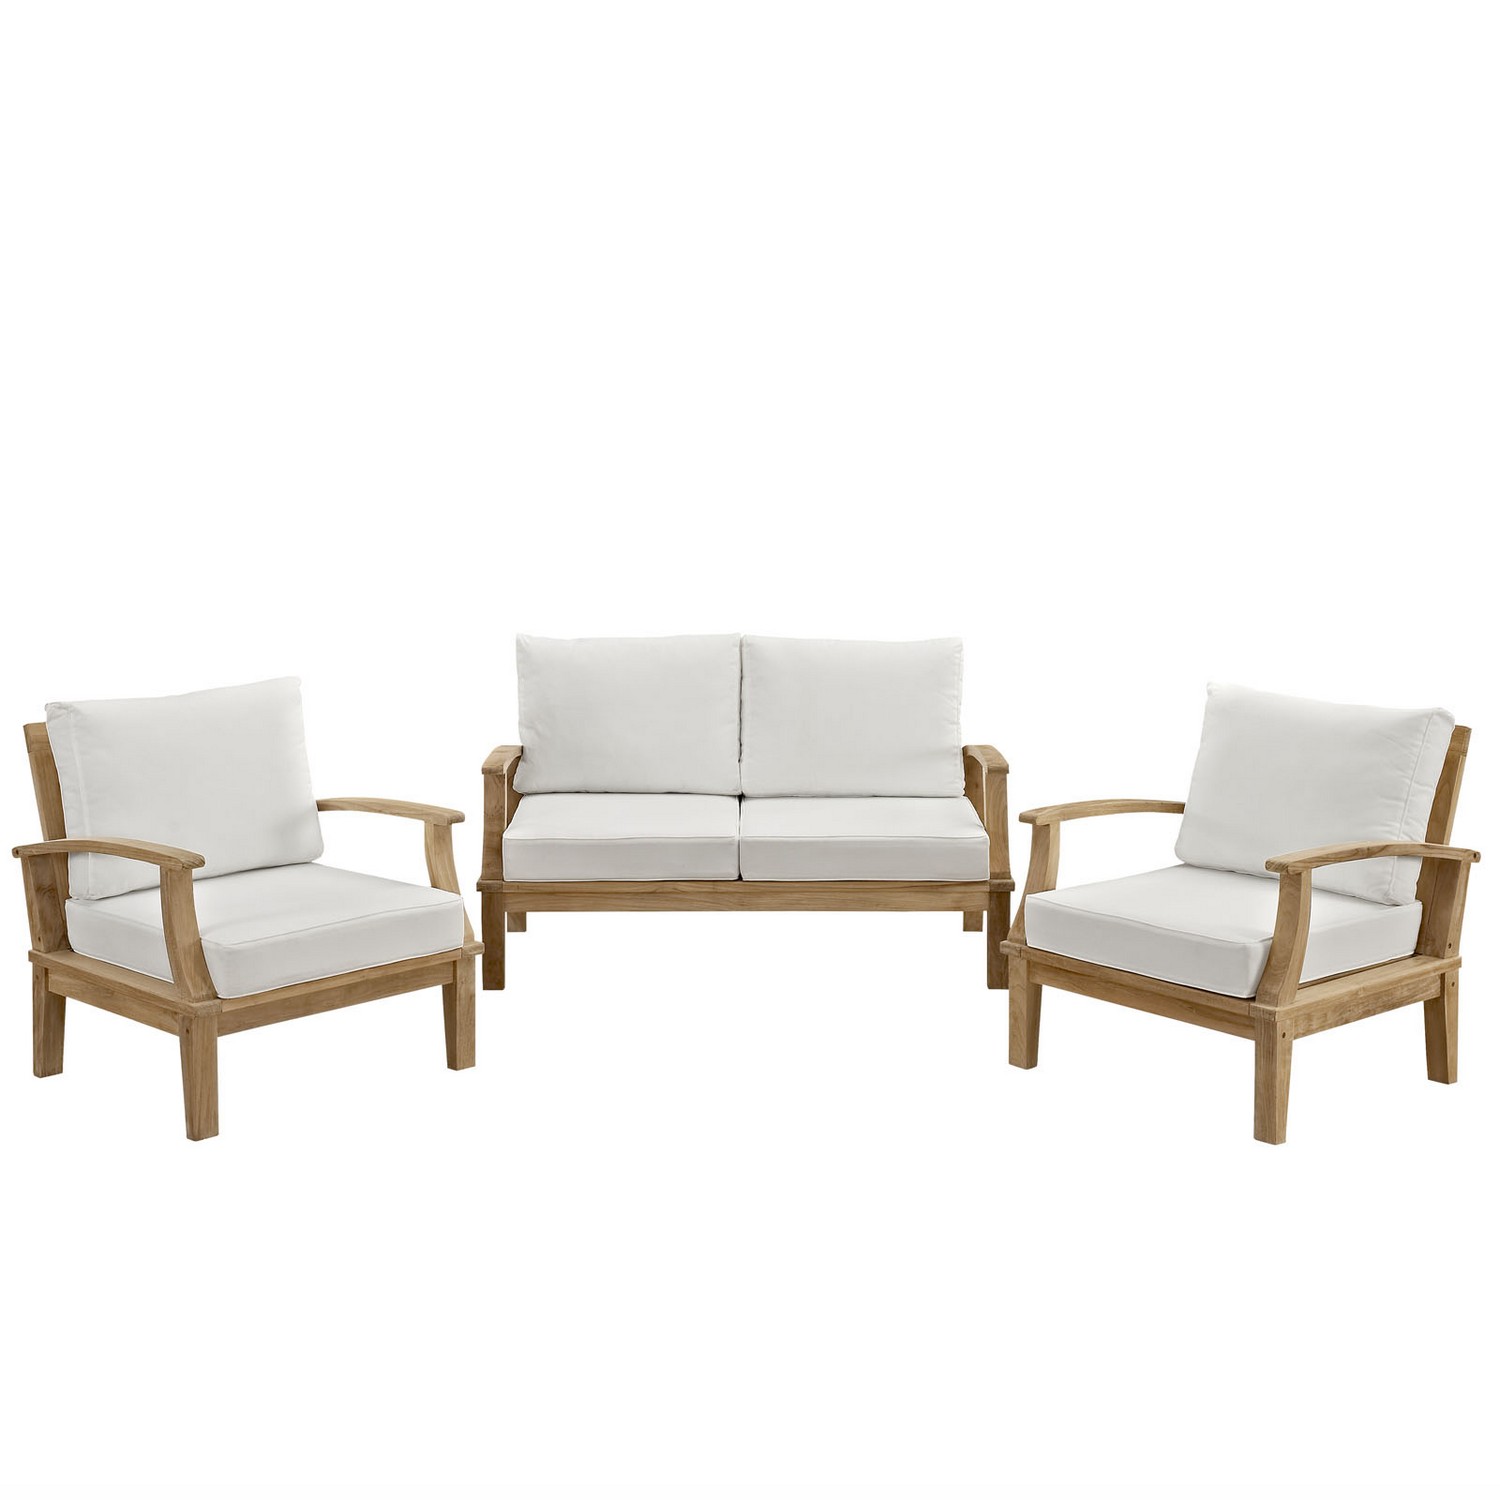 Modway Marina 3 Piece Outdoor Patio Teak Sofa Set - Natural White